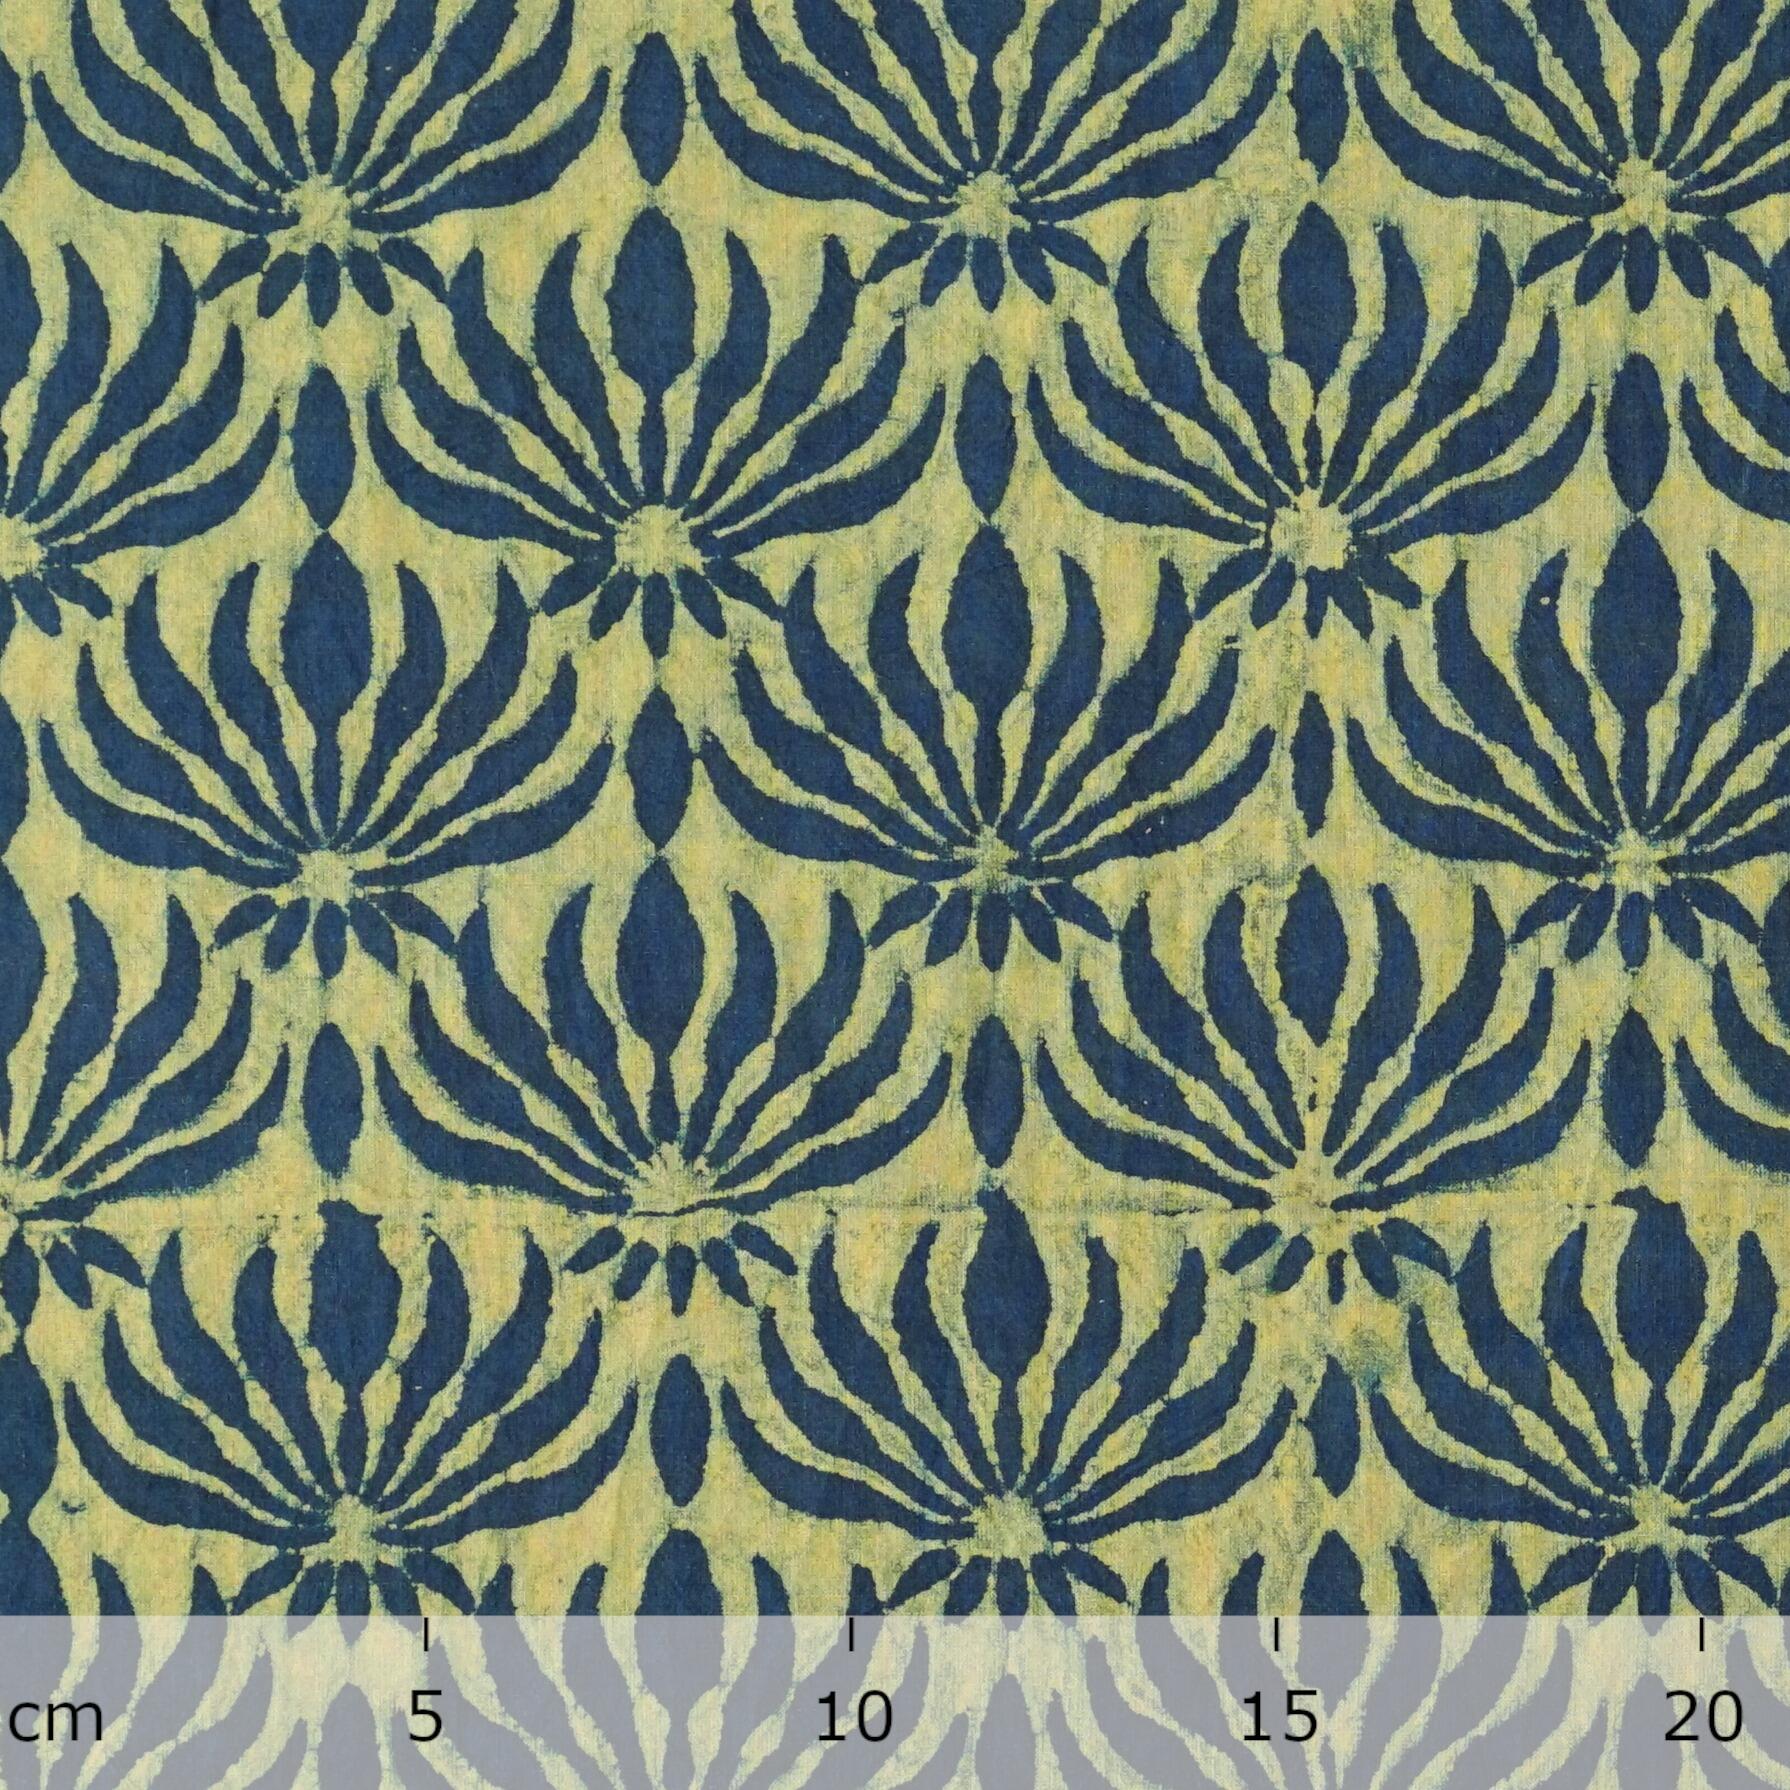 AHM54 - Block-Printed Fabric - Lotus Flower Design - Indigo & Tamarisk Dyes - Ruler